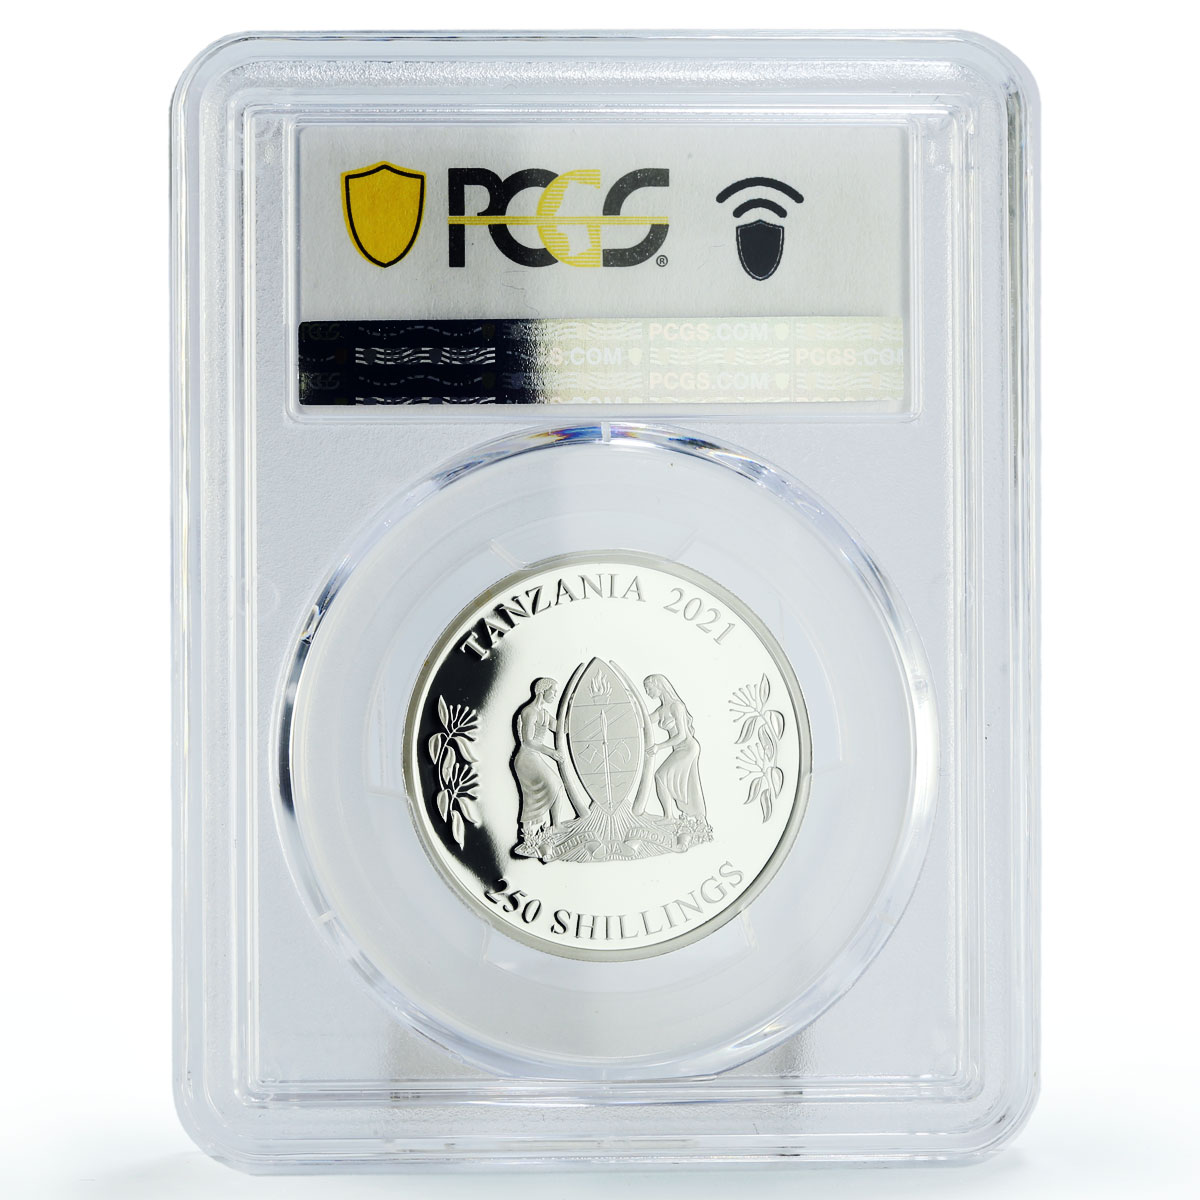 Tanzania 500 shillings Lunar Calendar Year of the Ox PR69 PCGS silver coin 2021